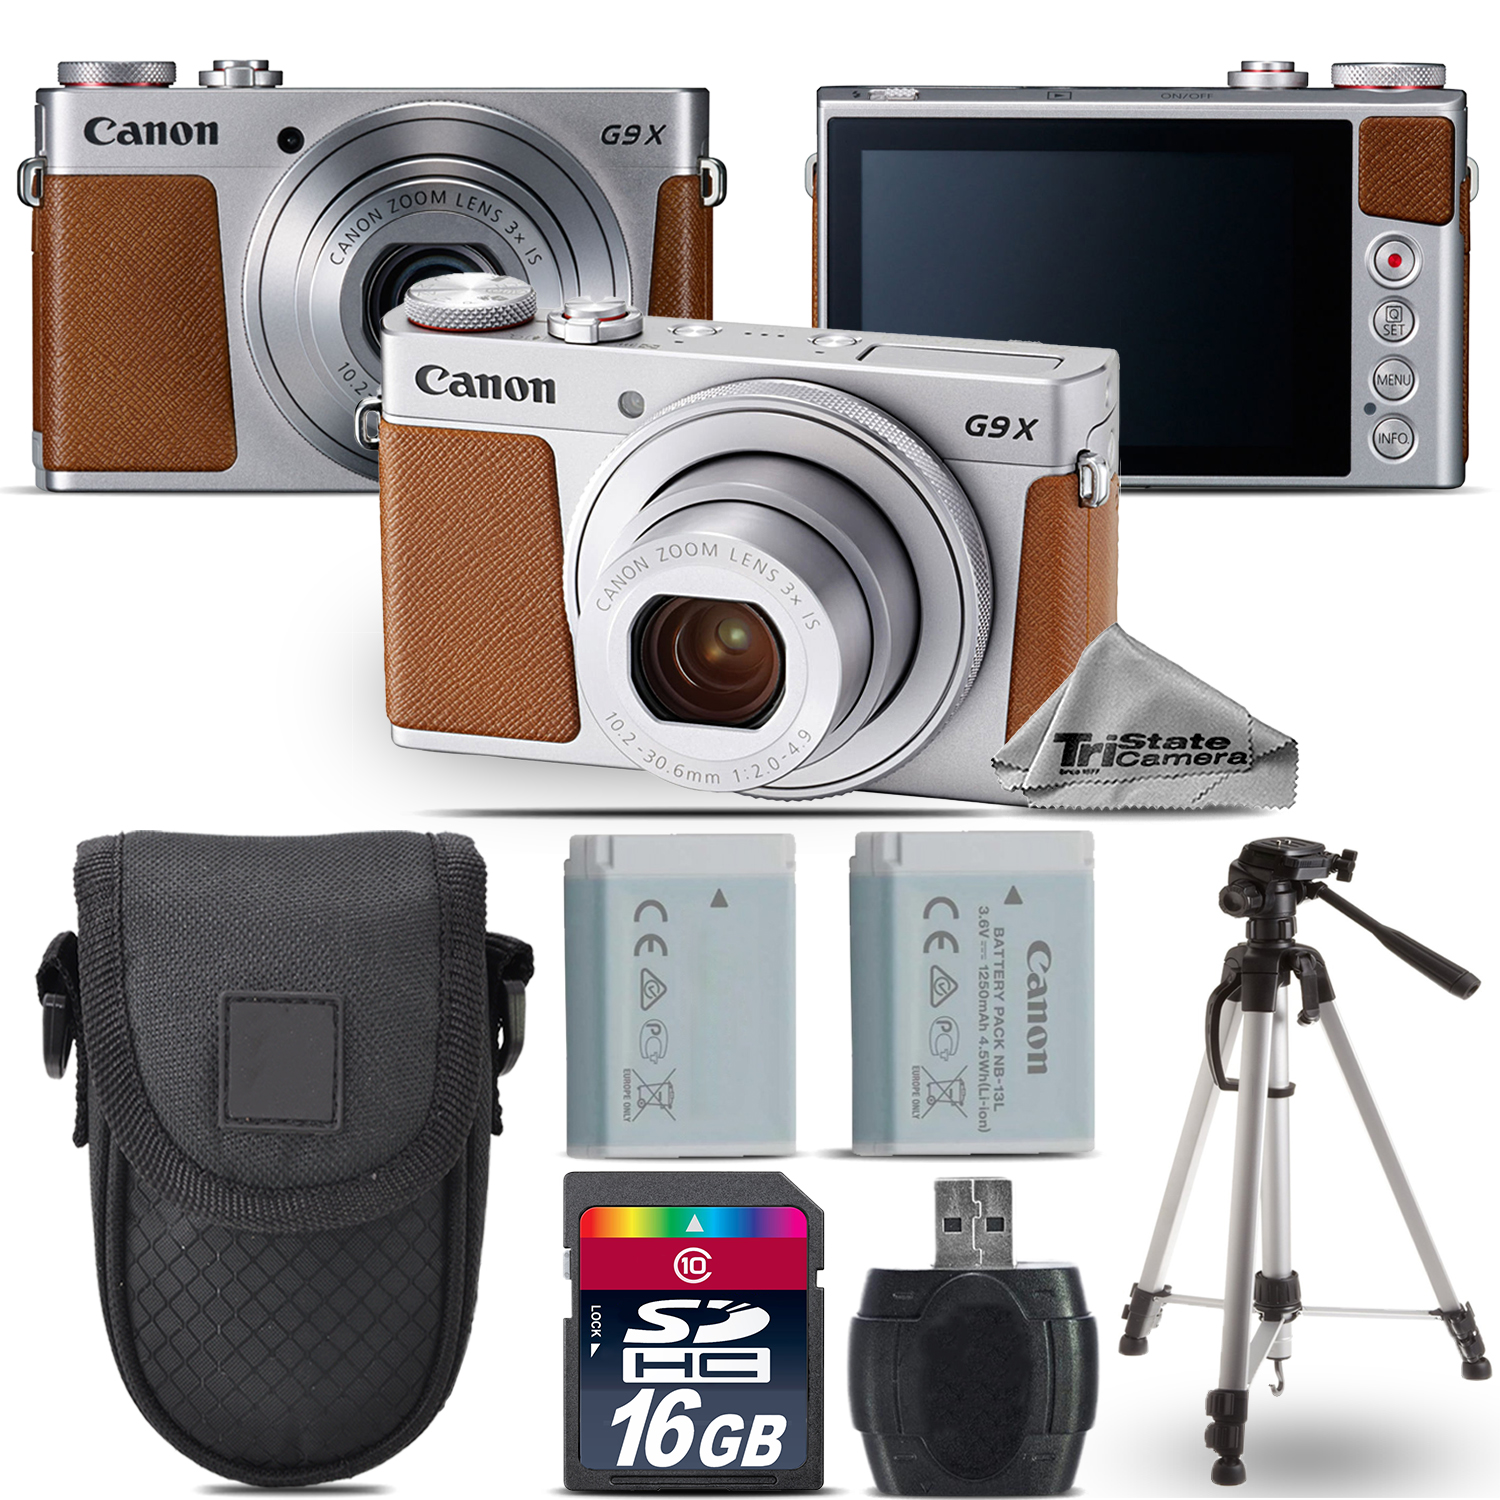 PowerShot G9 X Mark II Digital DIGIC 7 Camera + Tripod + Case - 16GB Kit *FREE SHIPPING*